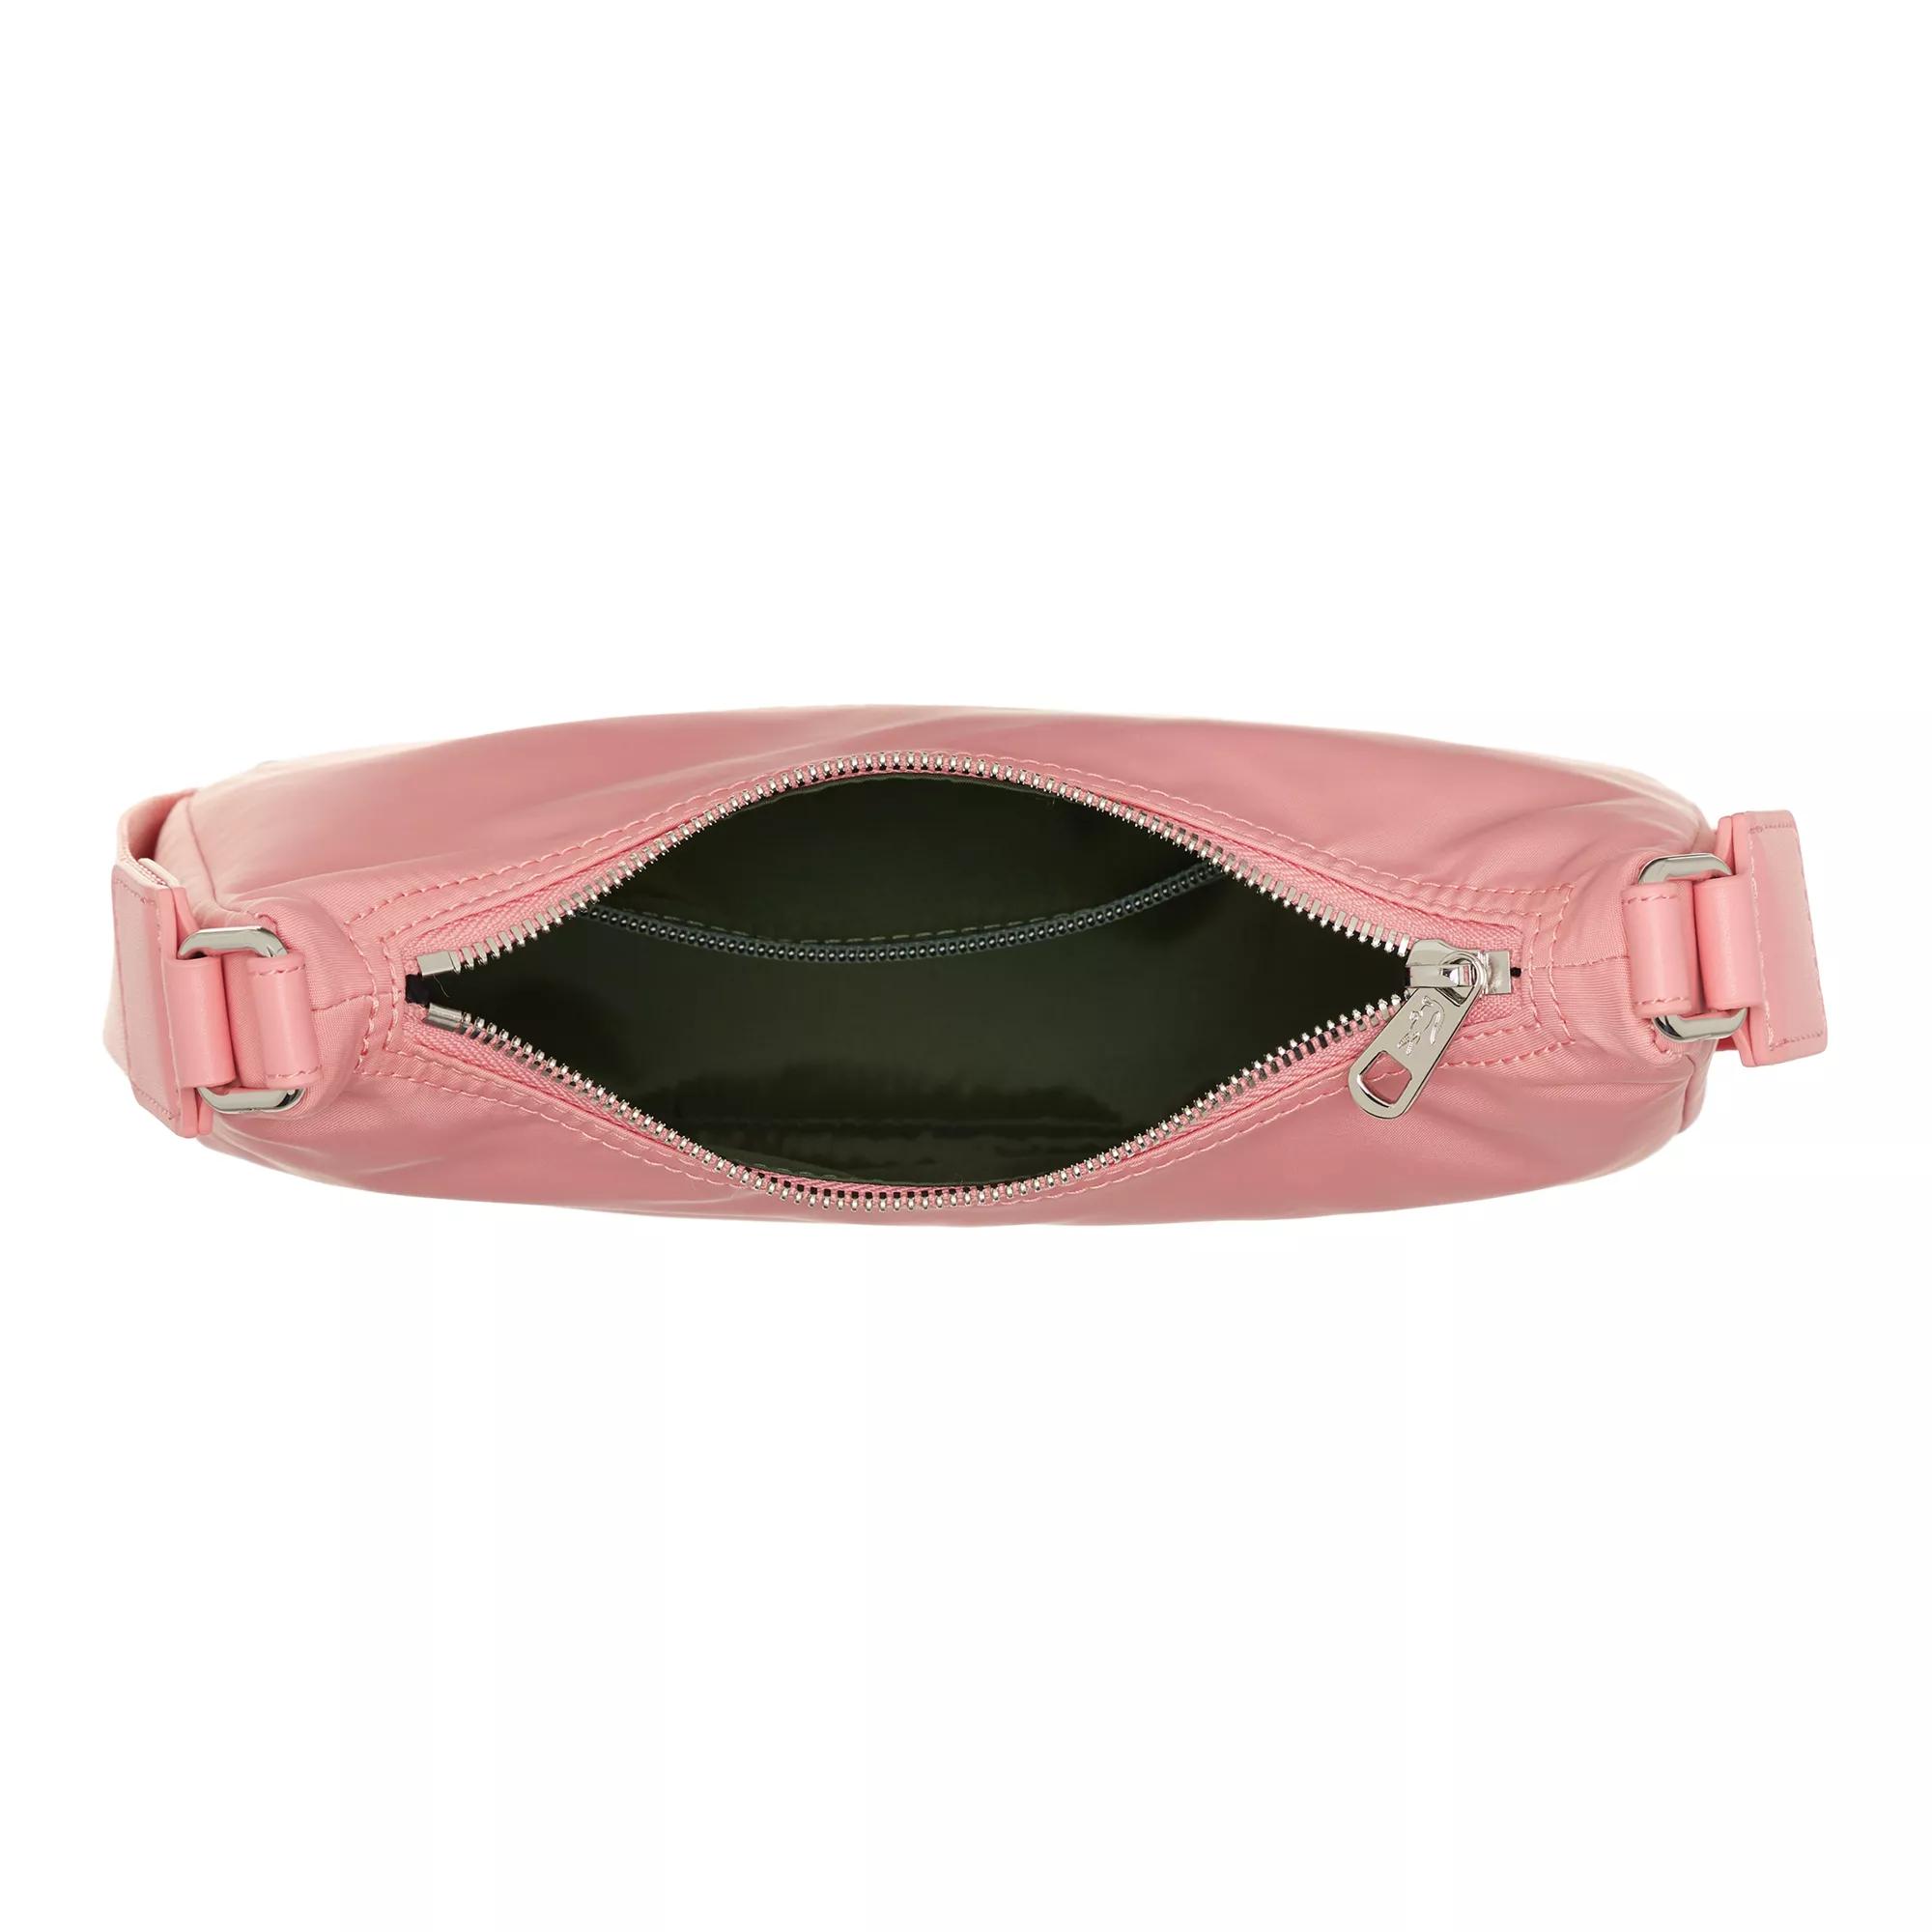 Lacoste Hobo bags Active Nylon Shoulder Bag in poeder roze